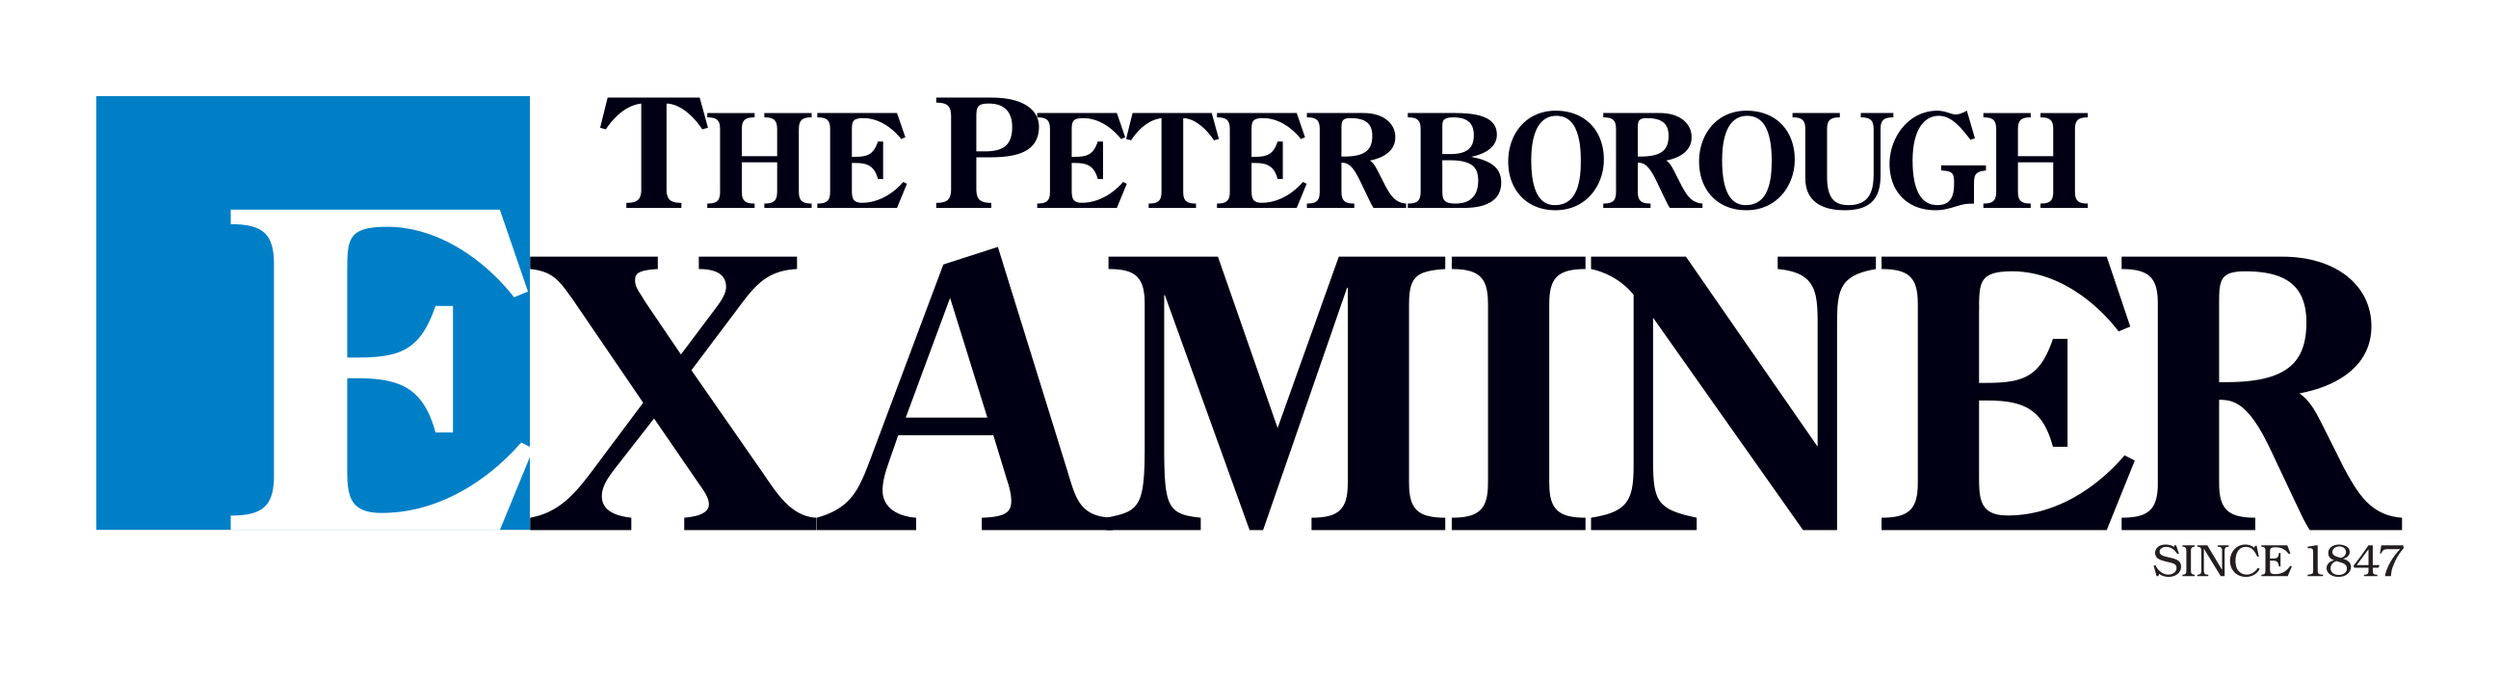 Peterborough Examiner logo on white.png